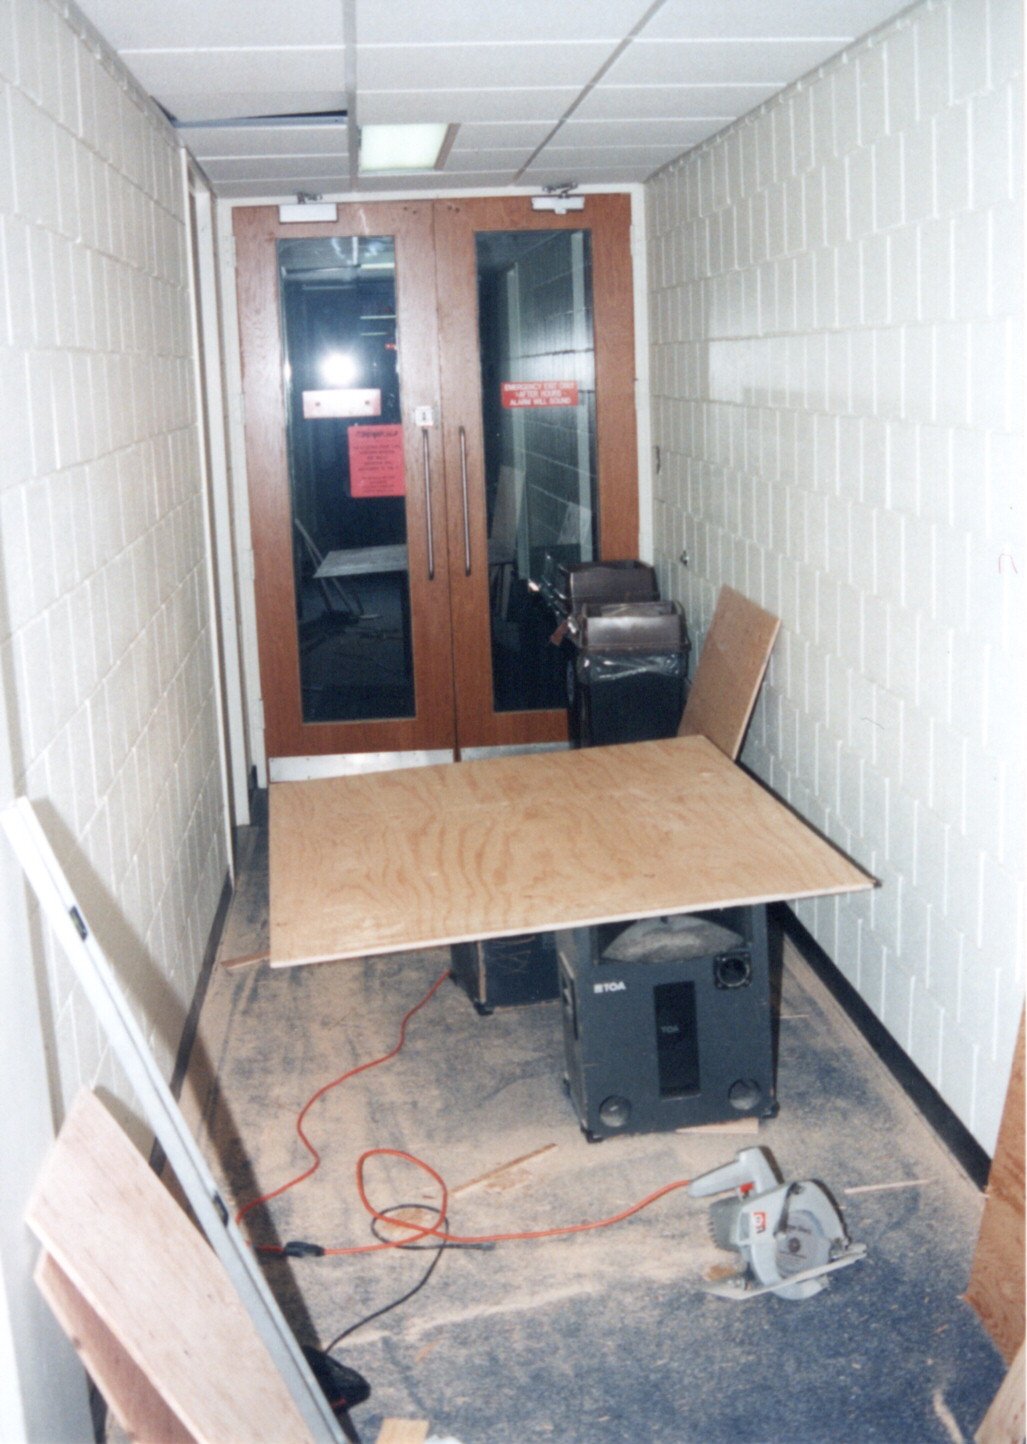 1995 - Studio B Rebuild - The Hallway - Our Work Space